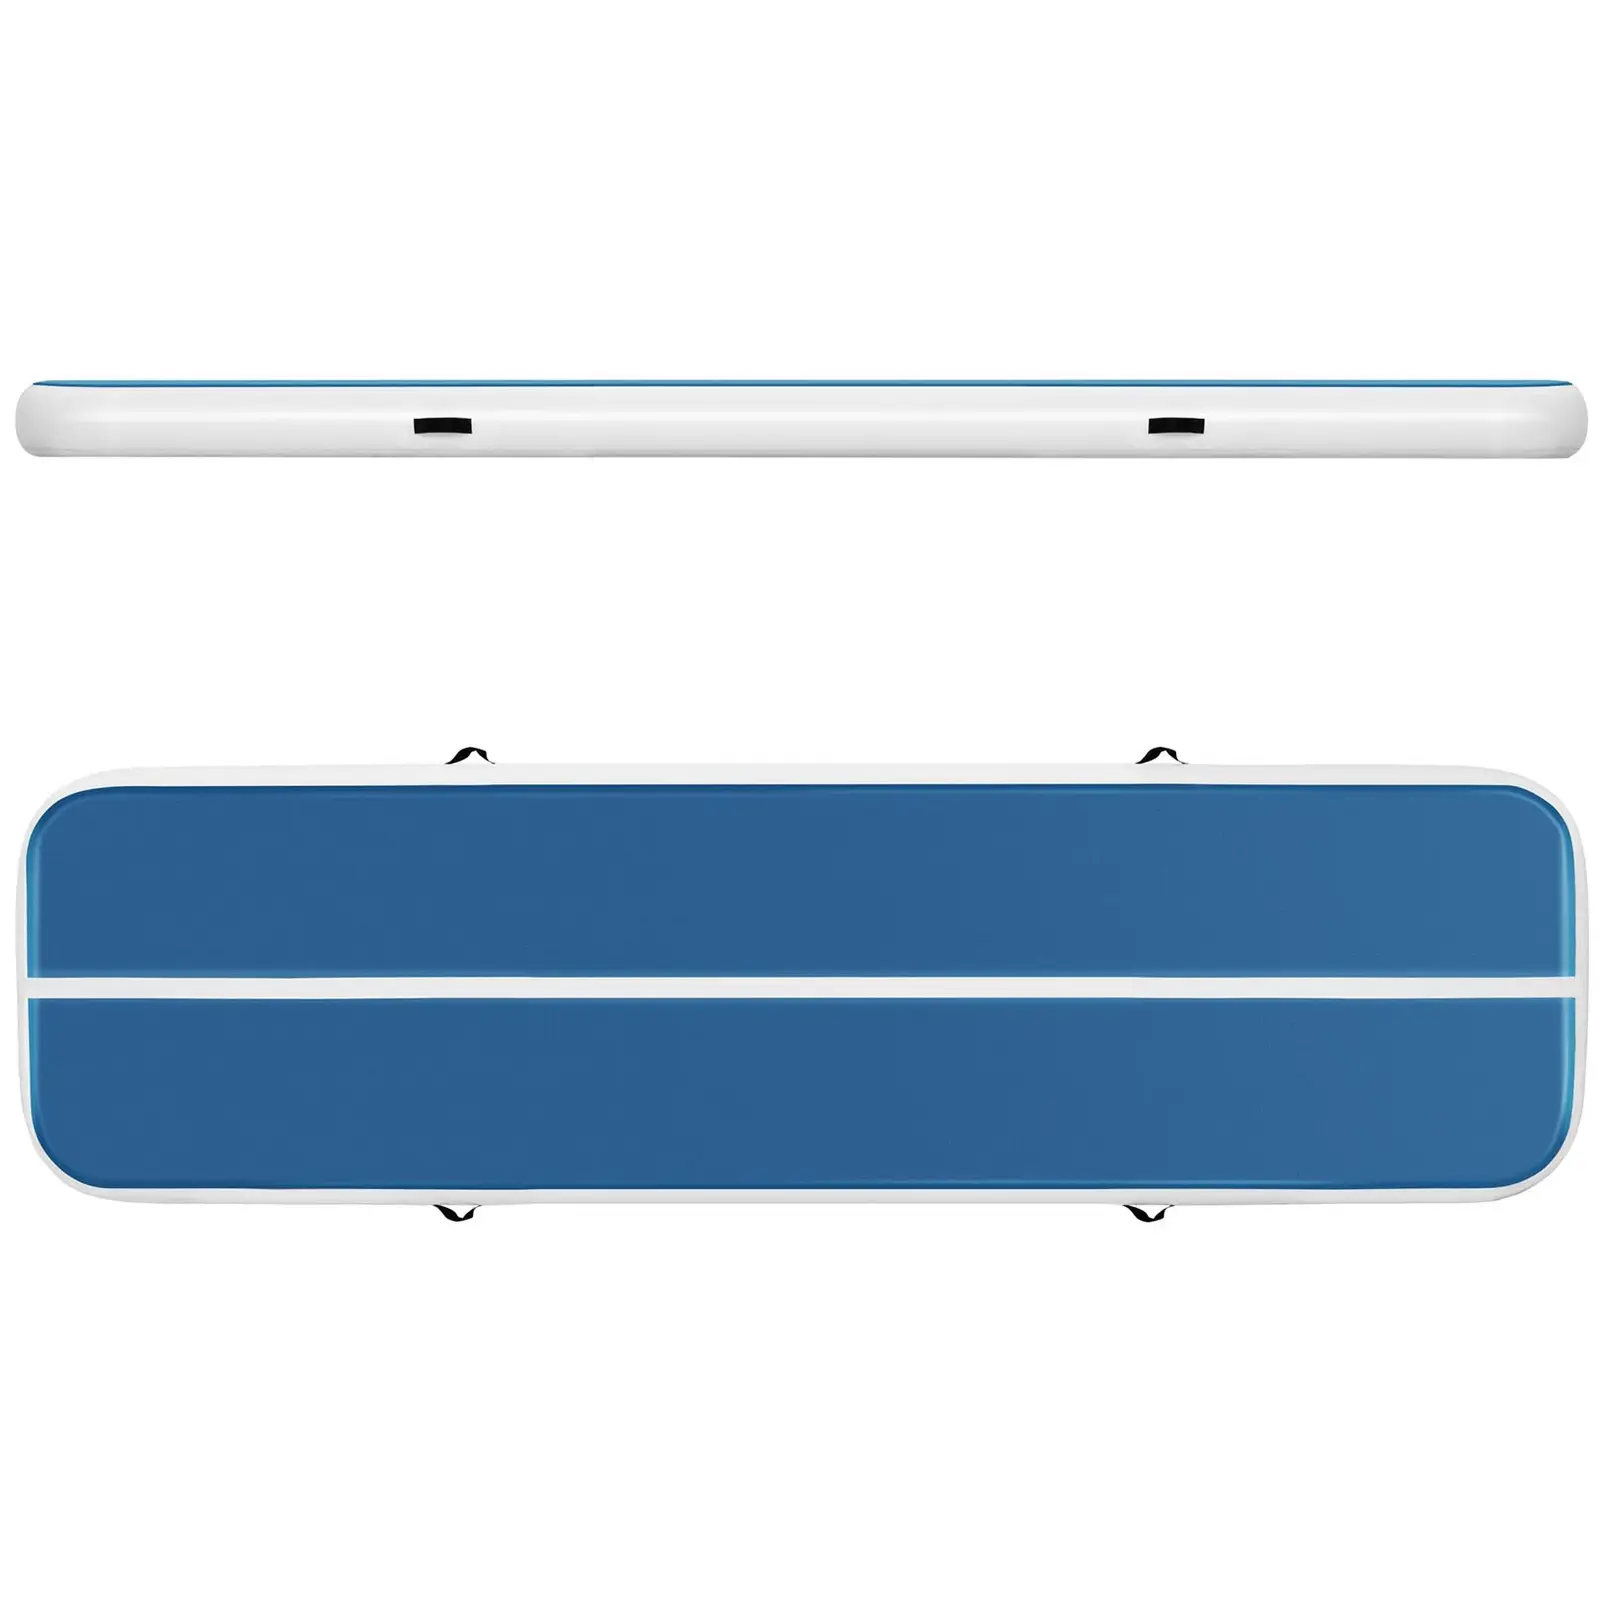 Nafukovací žíněnka - 400 x 100 x 20 cm - 200 kg - modrá/bílá